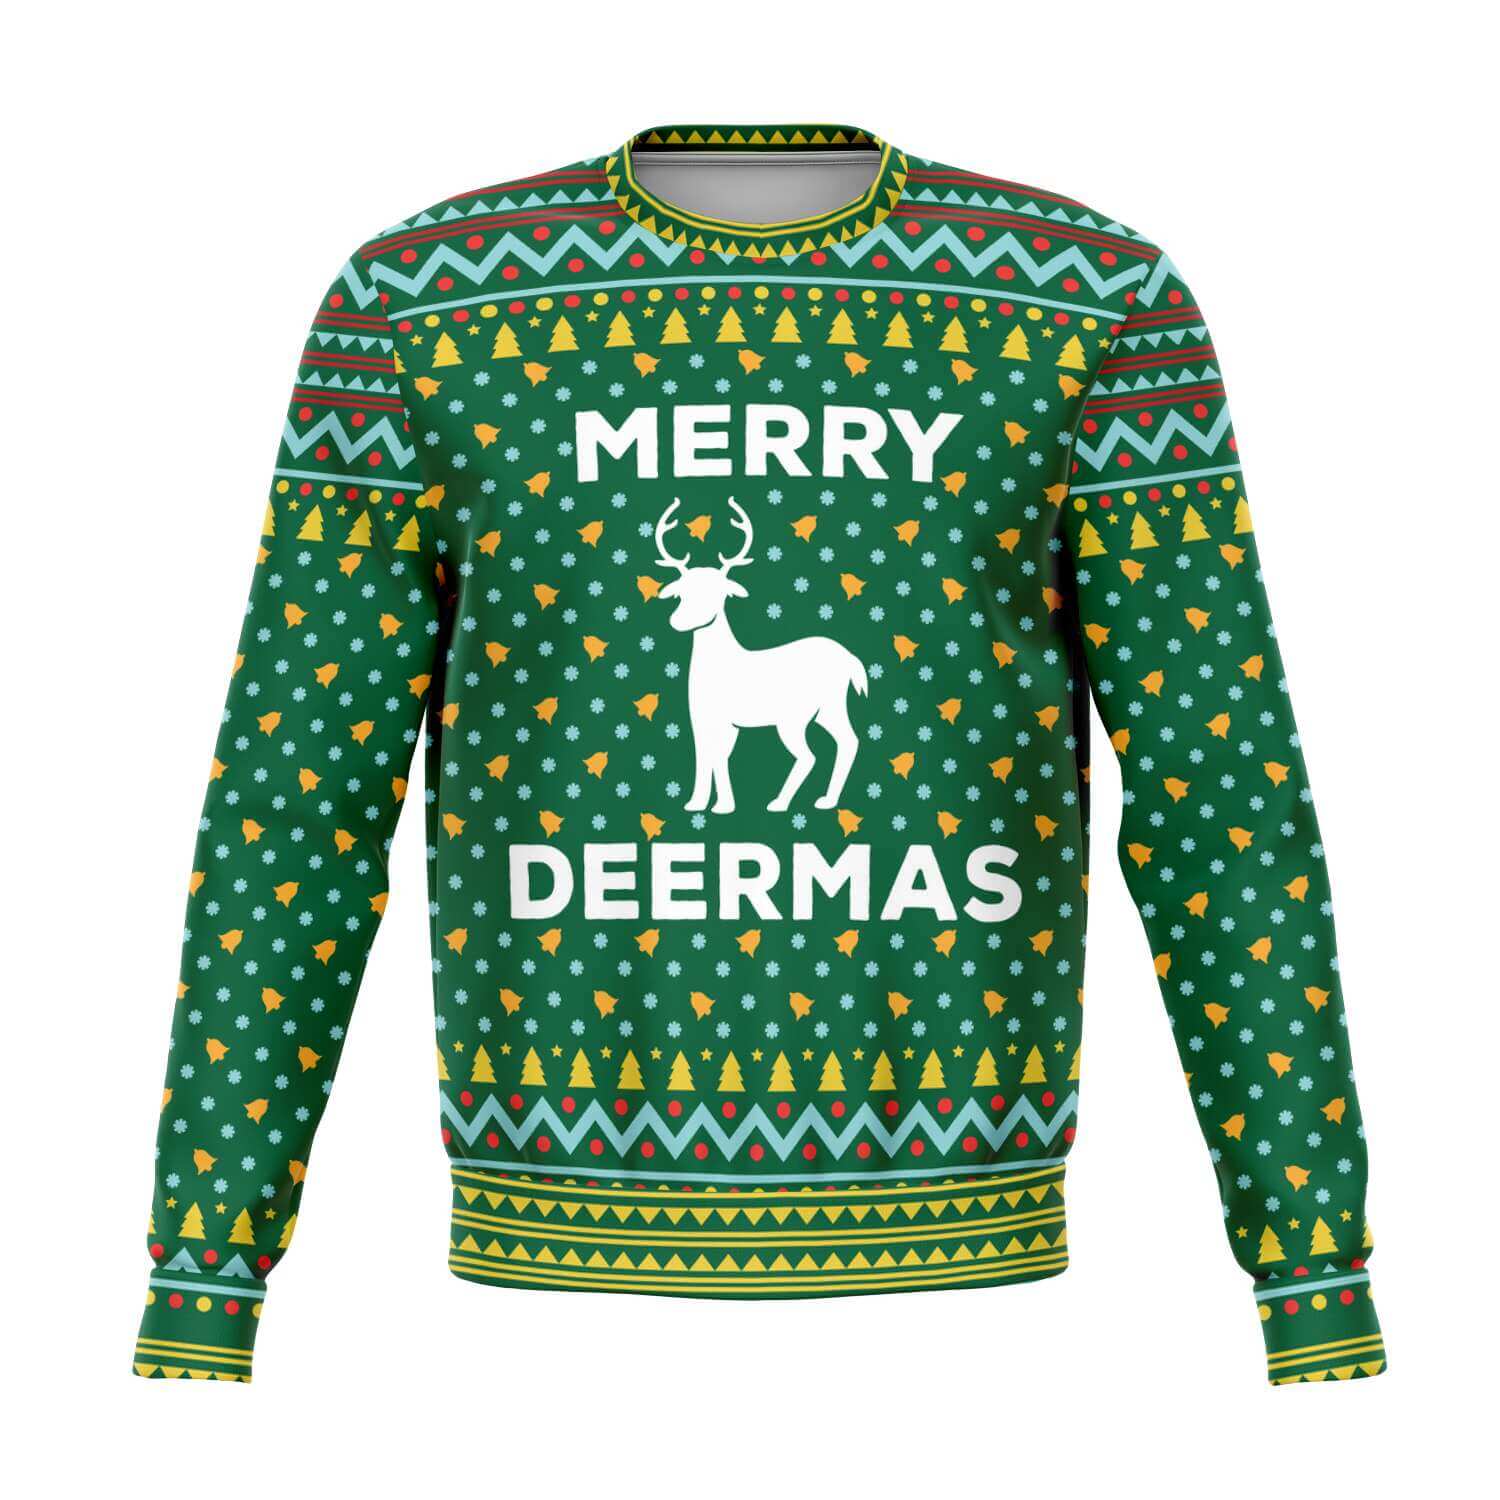 Merry-Deermas-Athletic-Fashion-sweatshirt